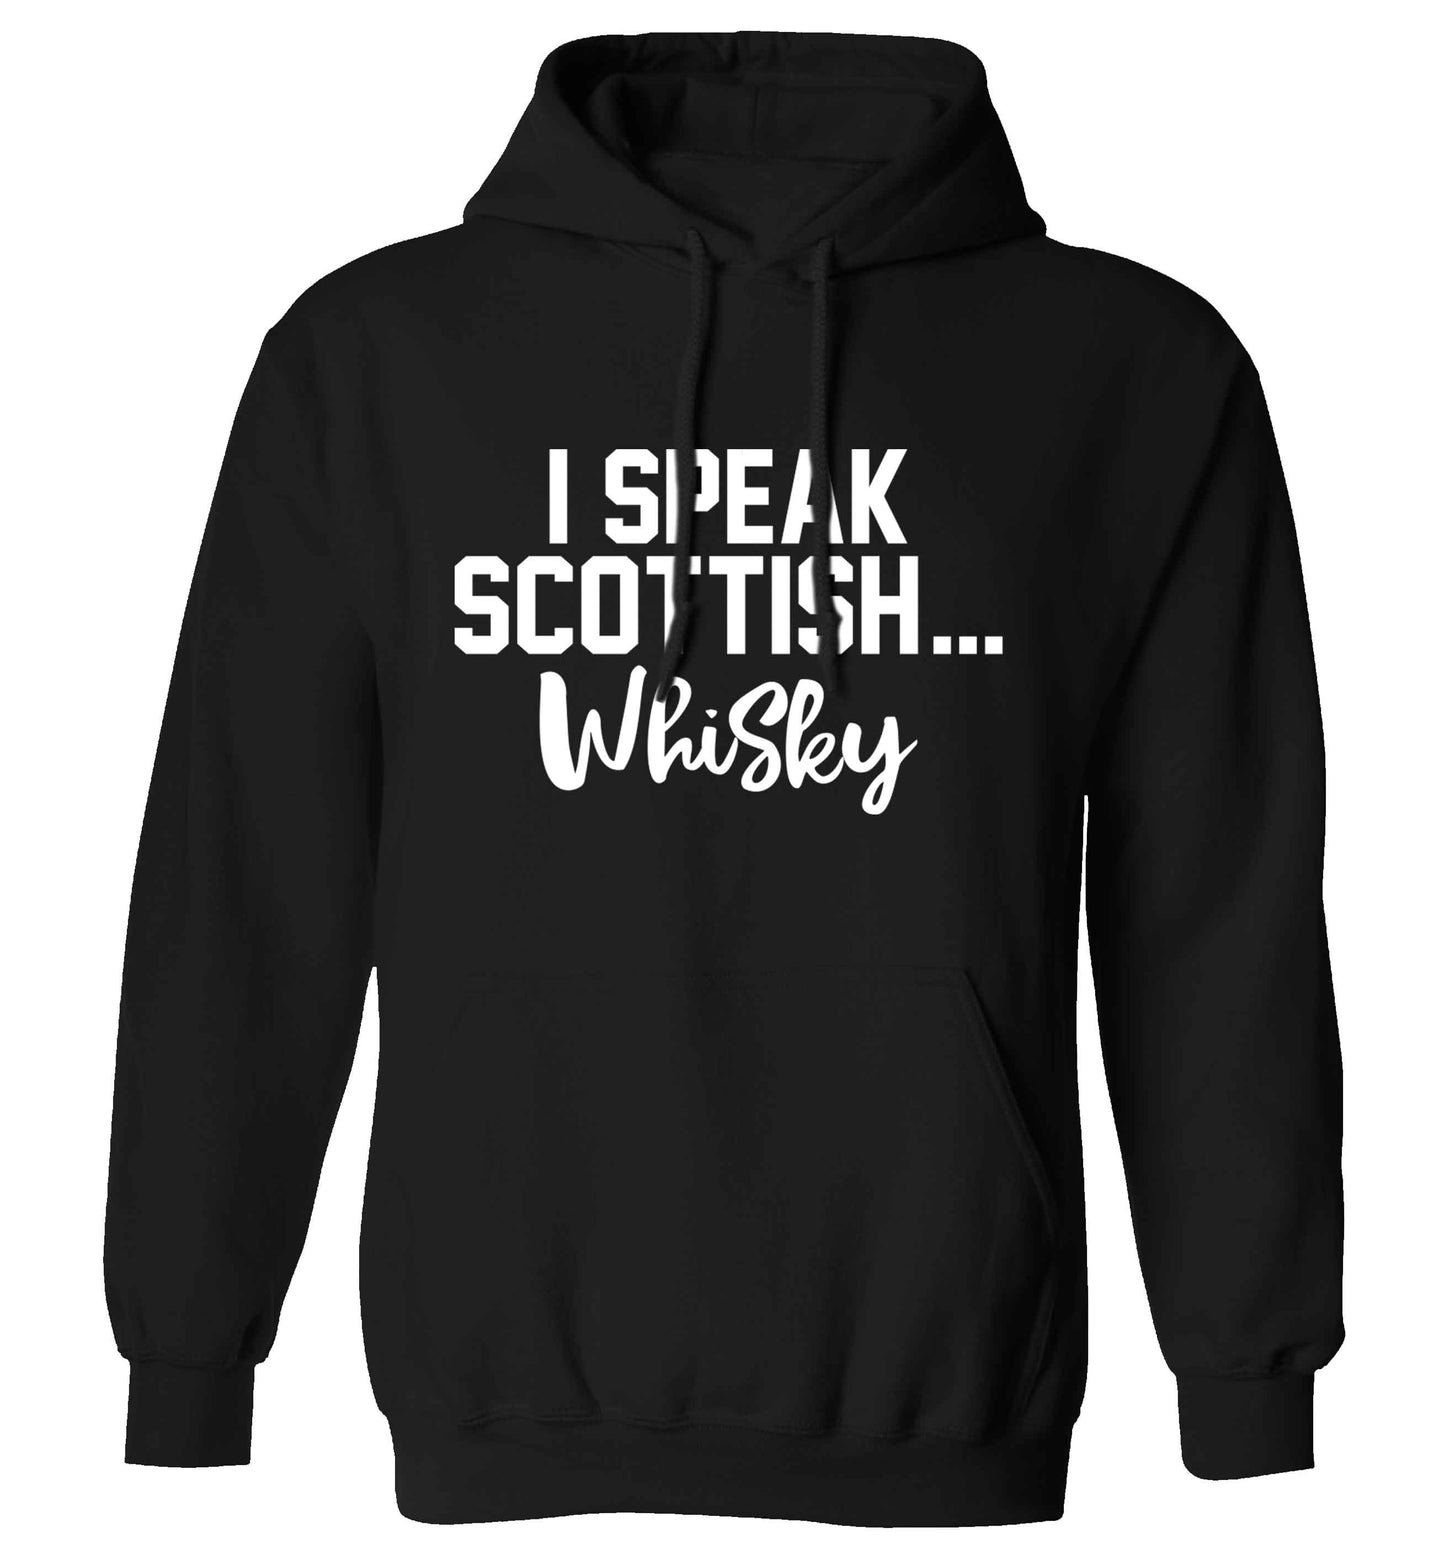 I speak scottish...whisky adults unisex black hoodie 2XL